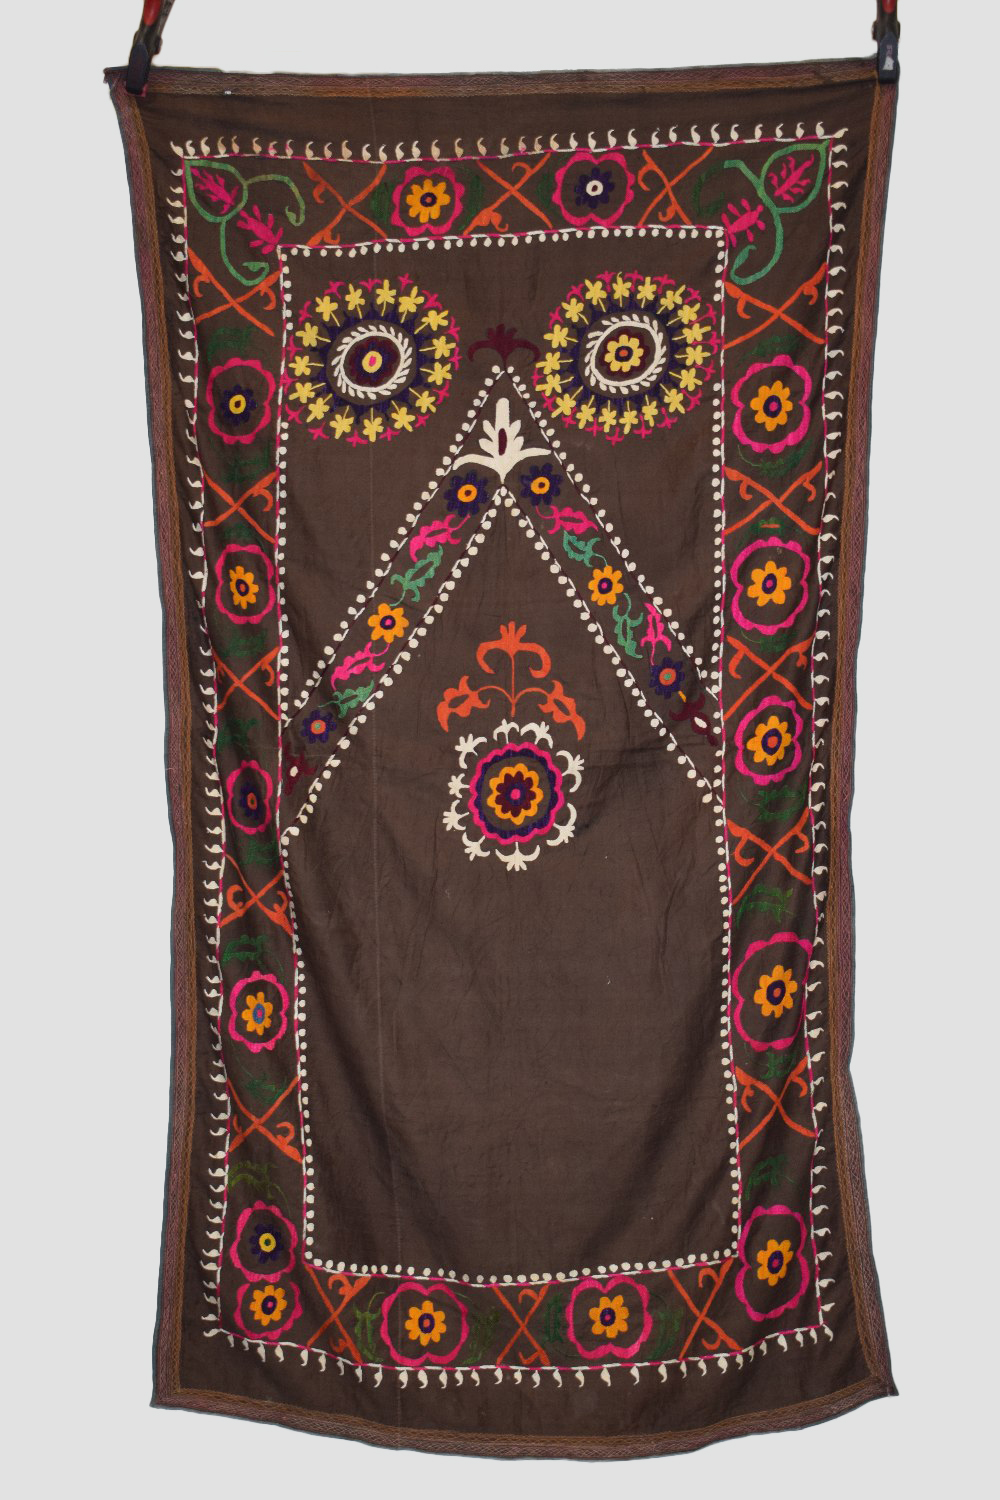 Uzbek suzani joinamoz (prayer cloth), Afghanistan, circa 1960s, 6ft. 3in. X 3ft. 5in. 1.91m. x 1.